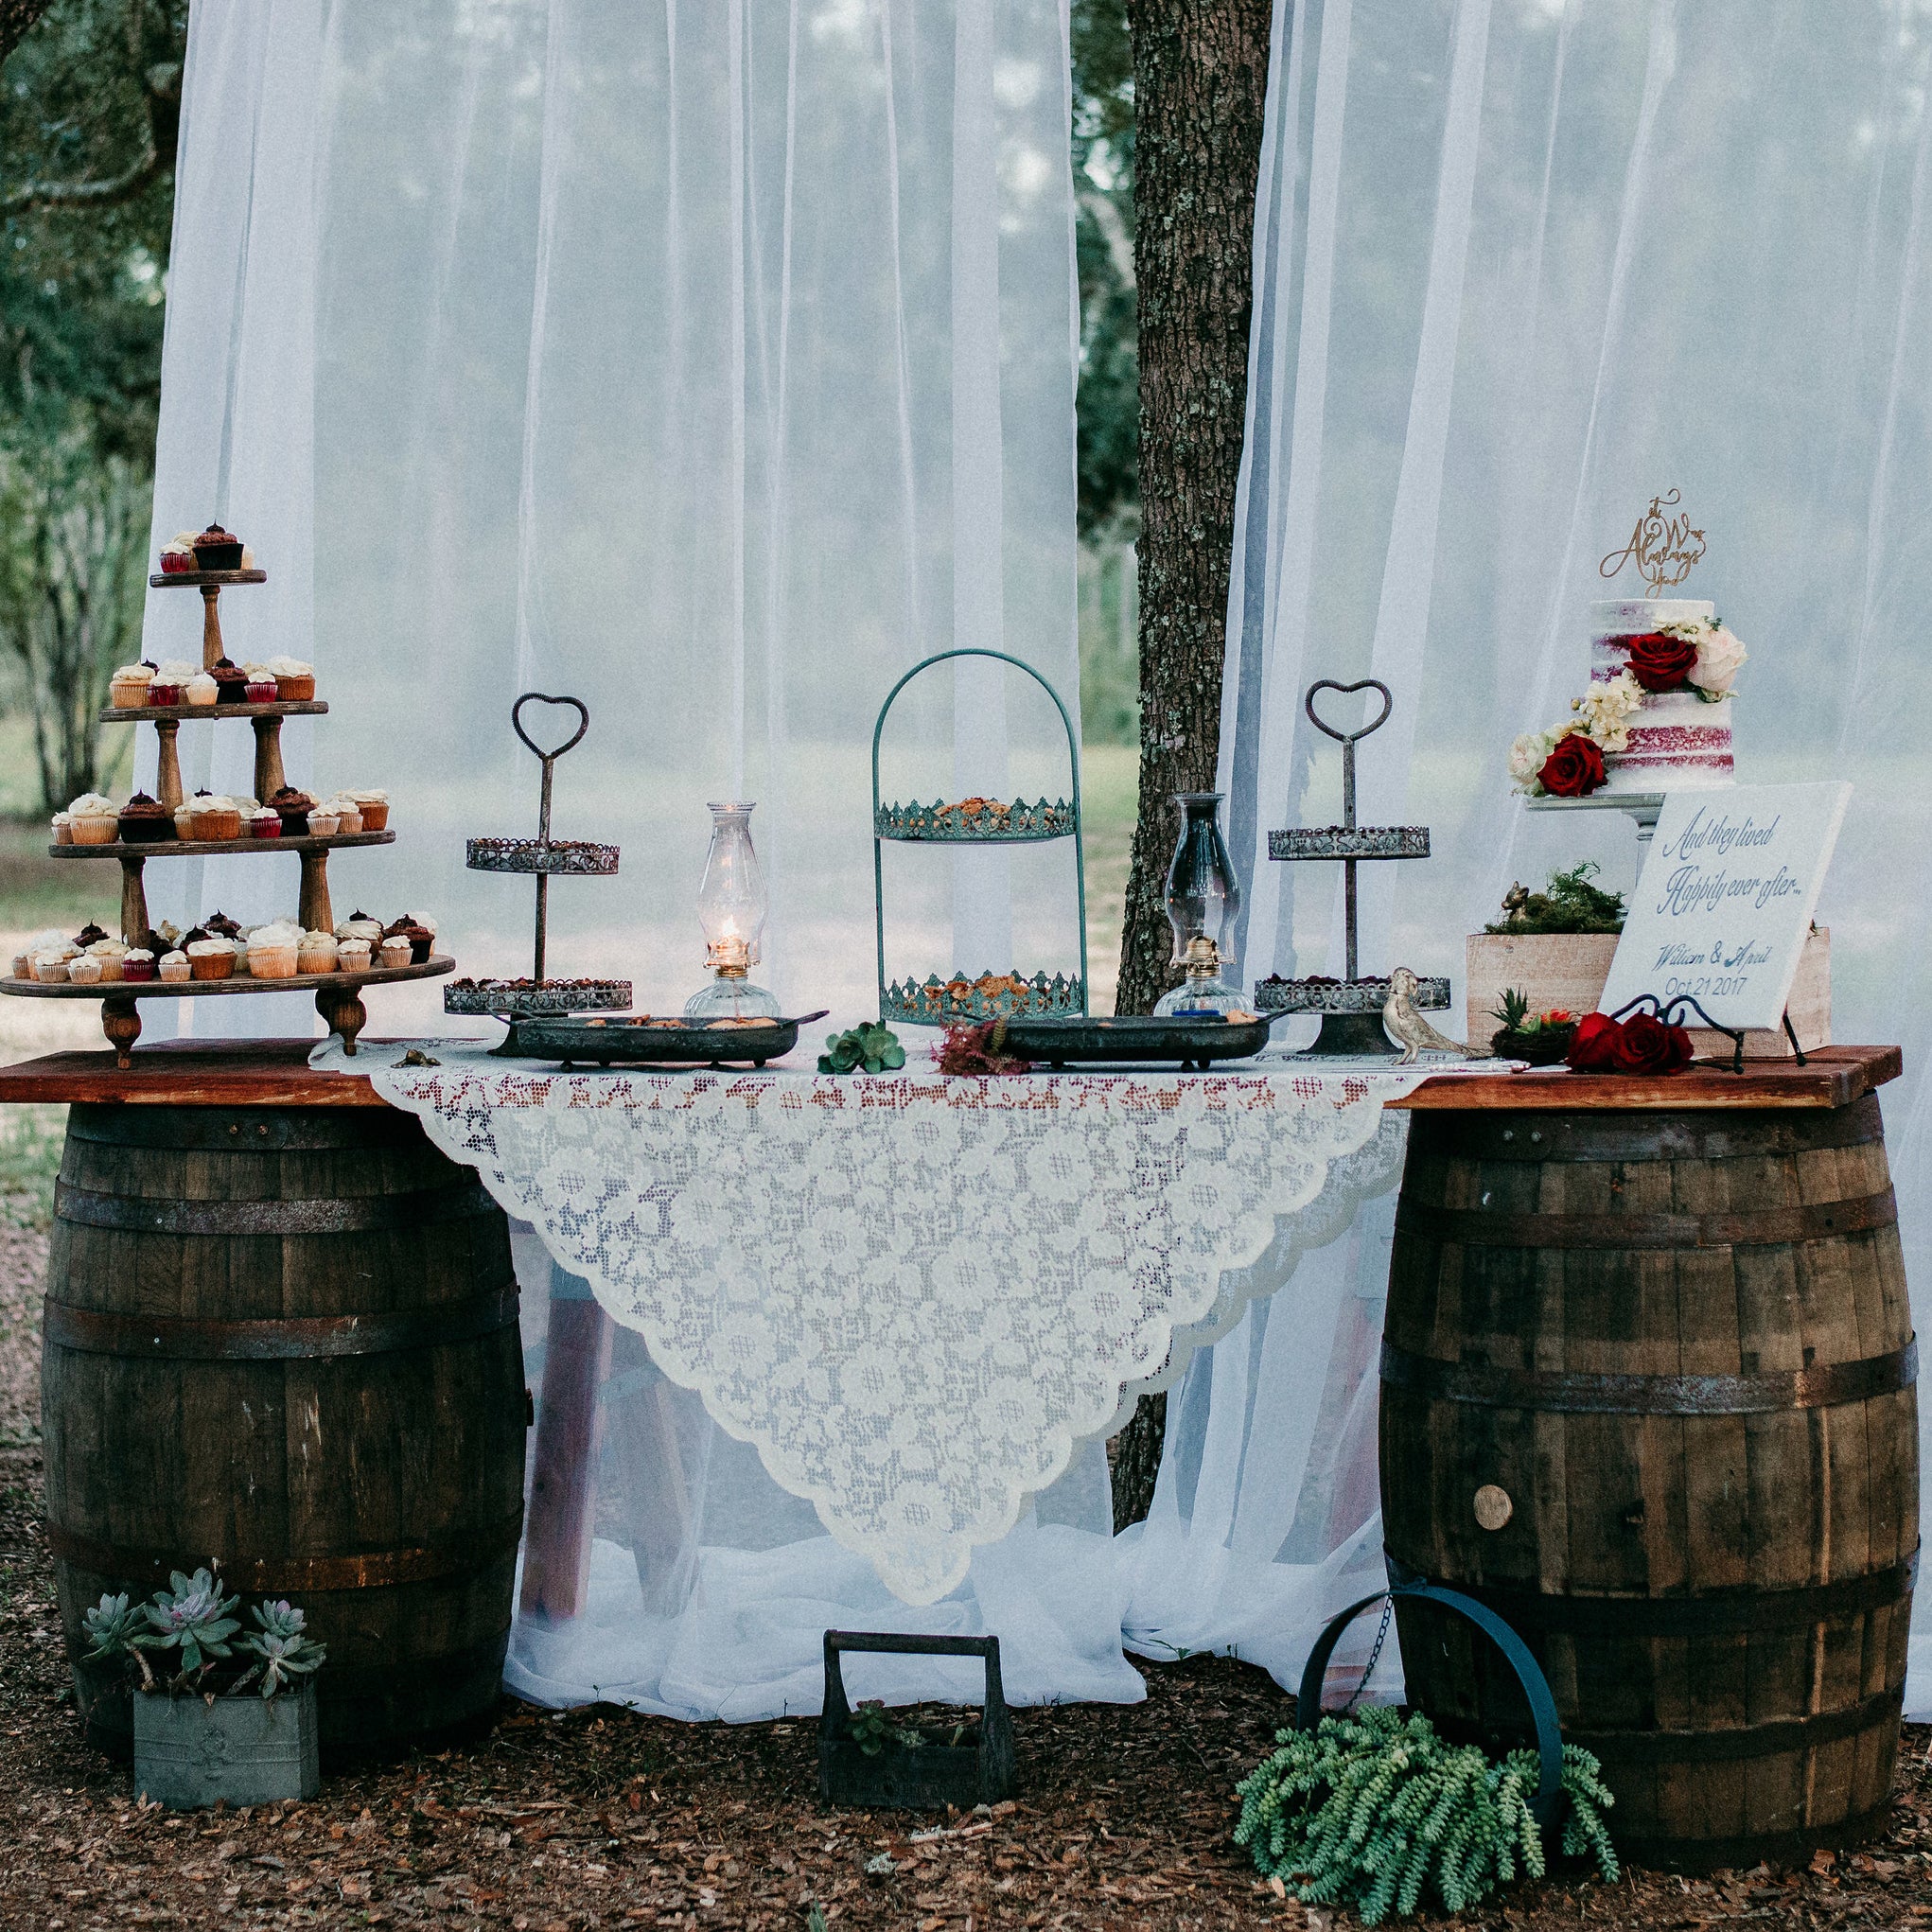 Double Barrel Plank Table - The Wedding Shop